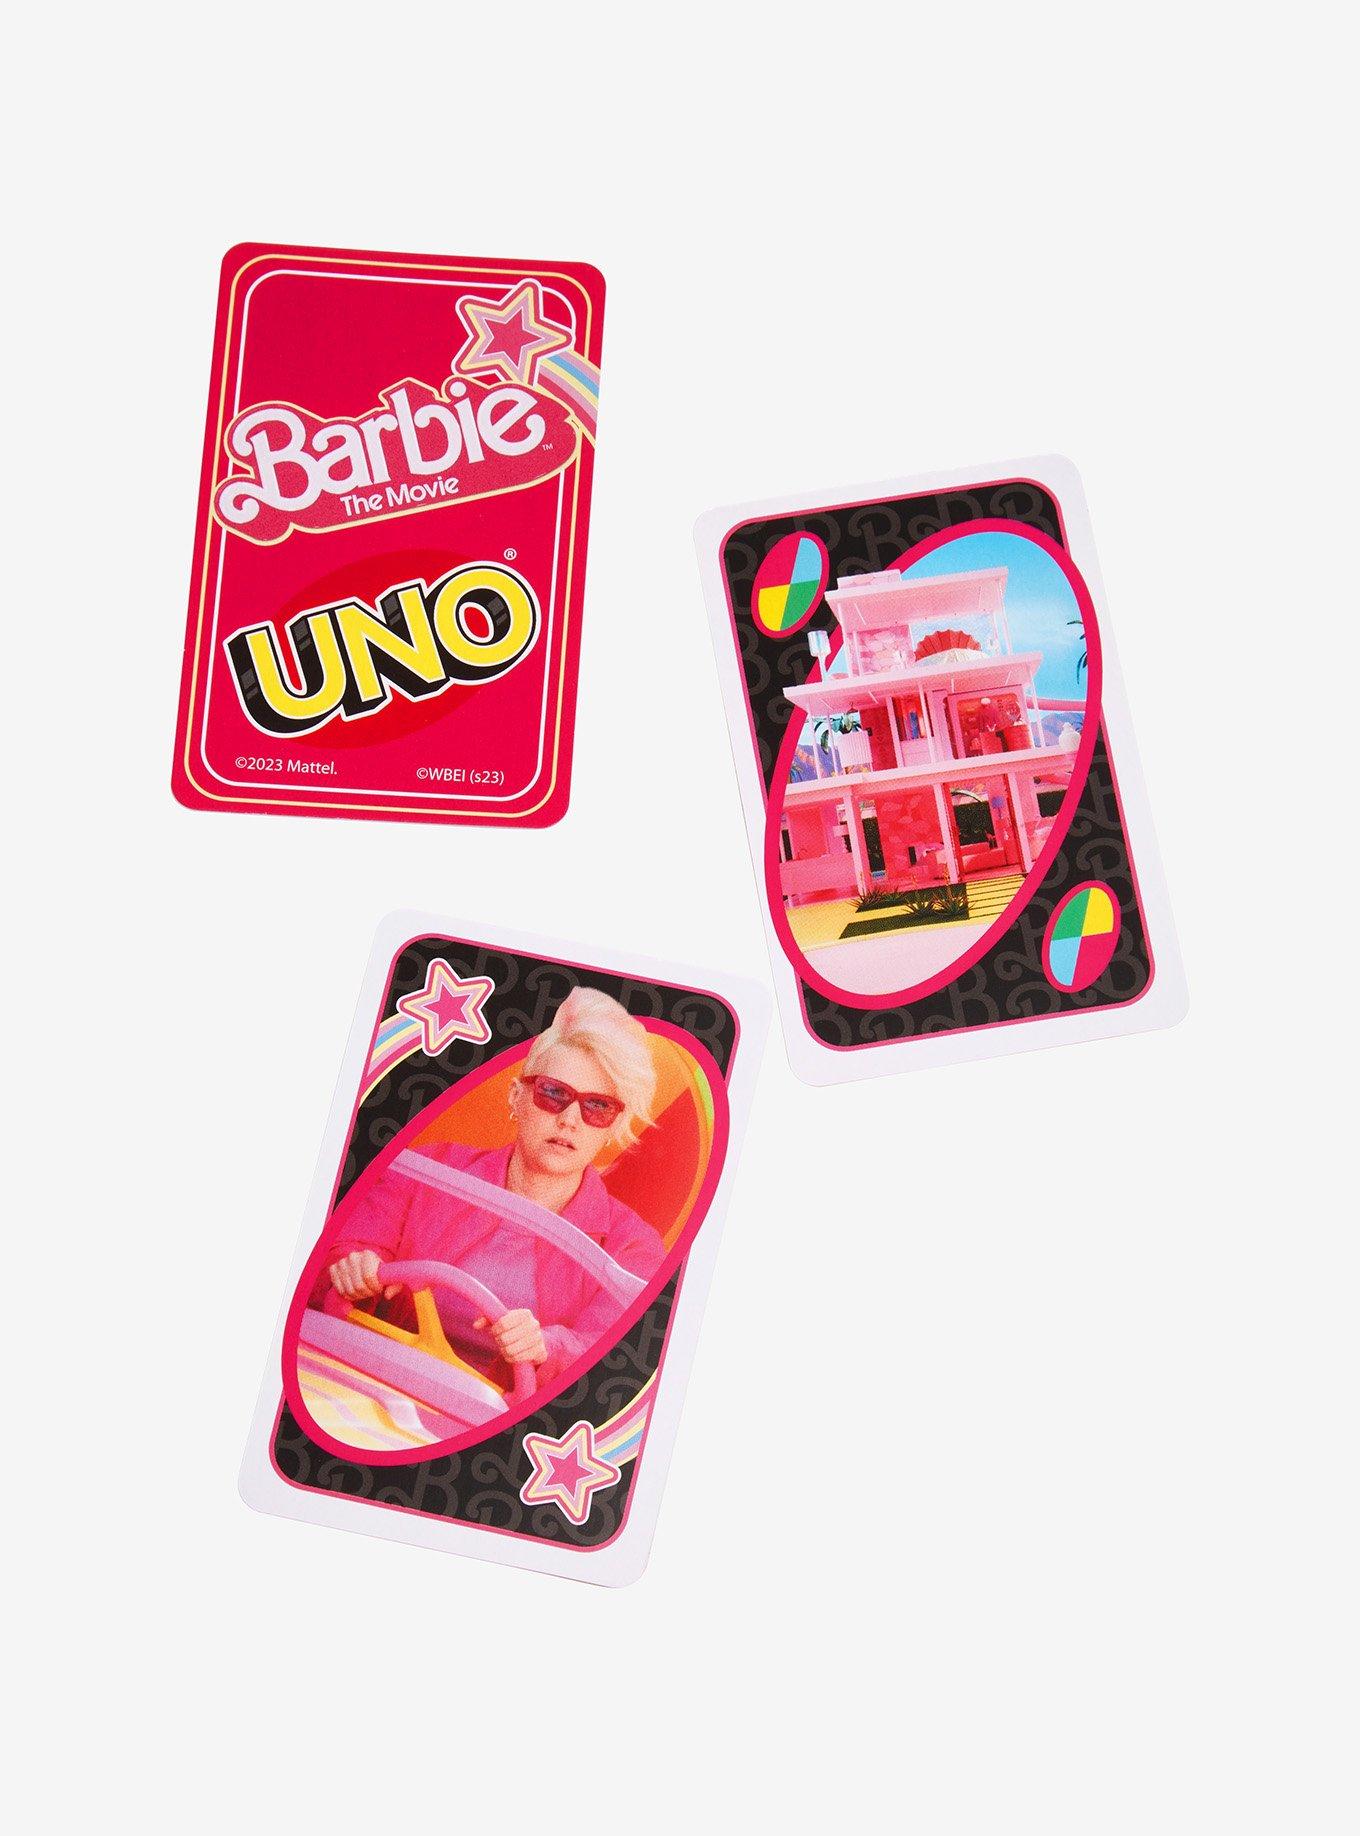 Uno: Disney Princess The Little Mermaid Edition Card Game